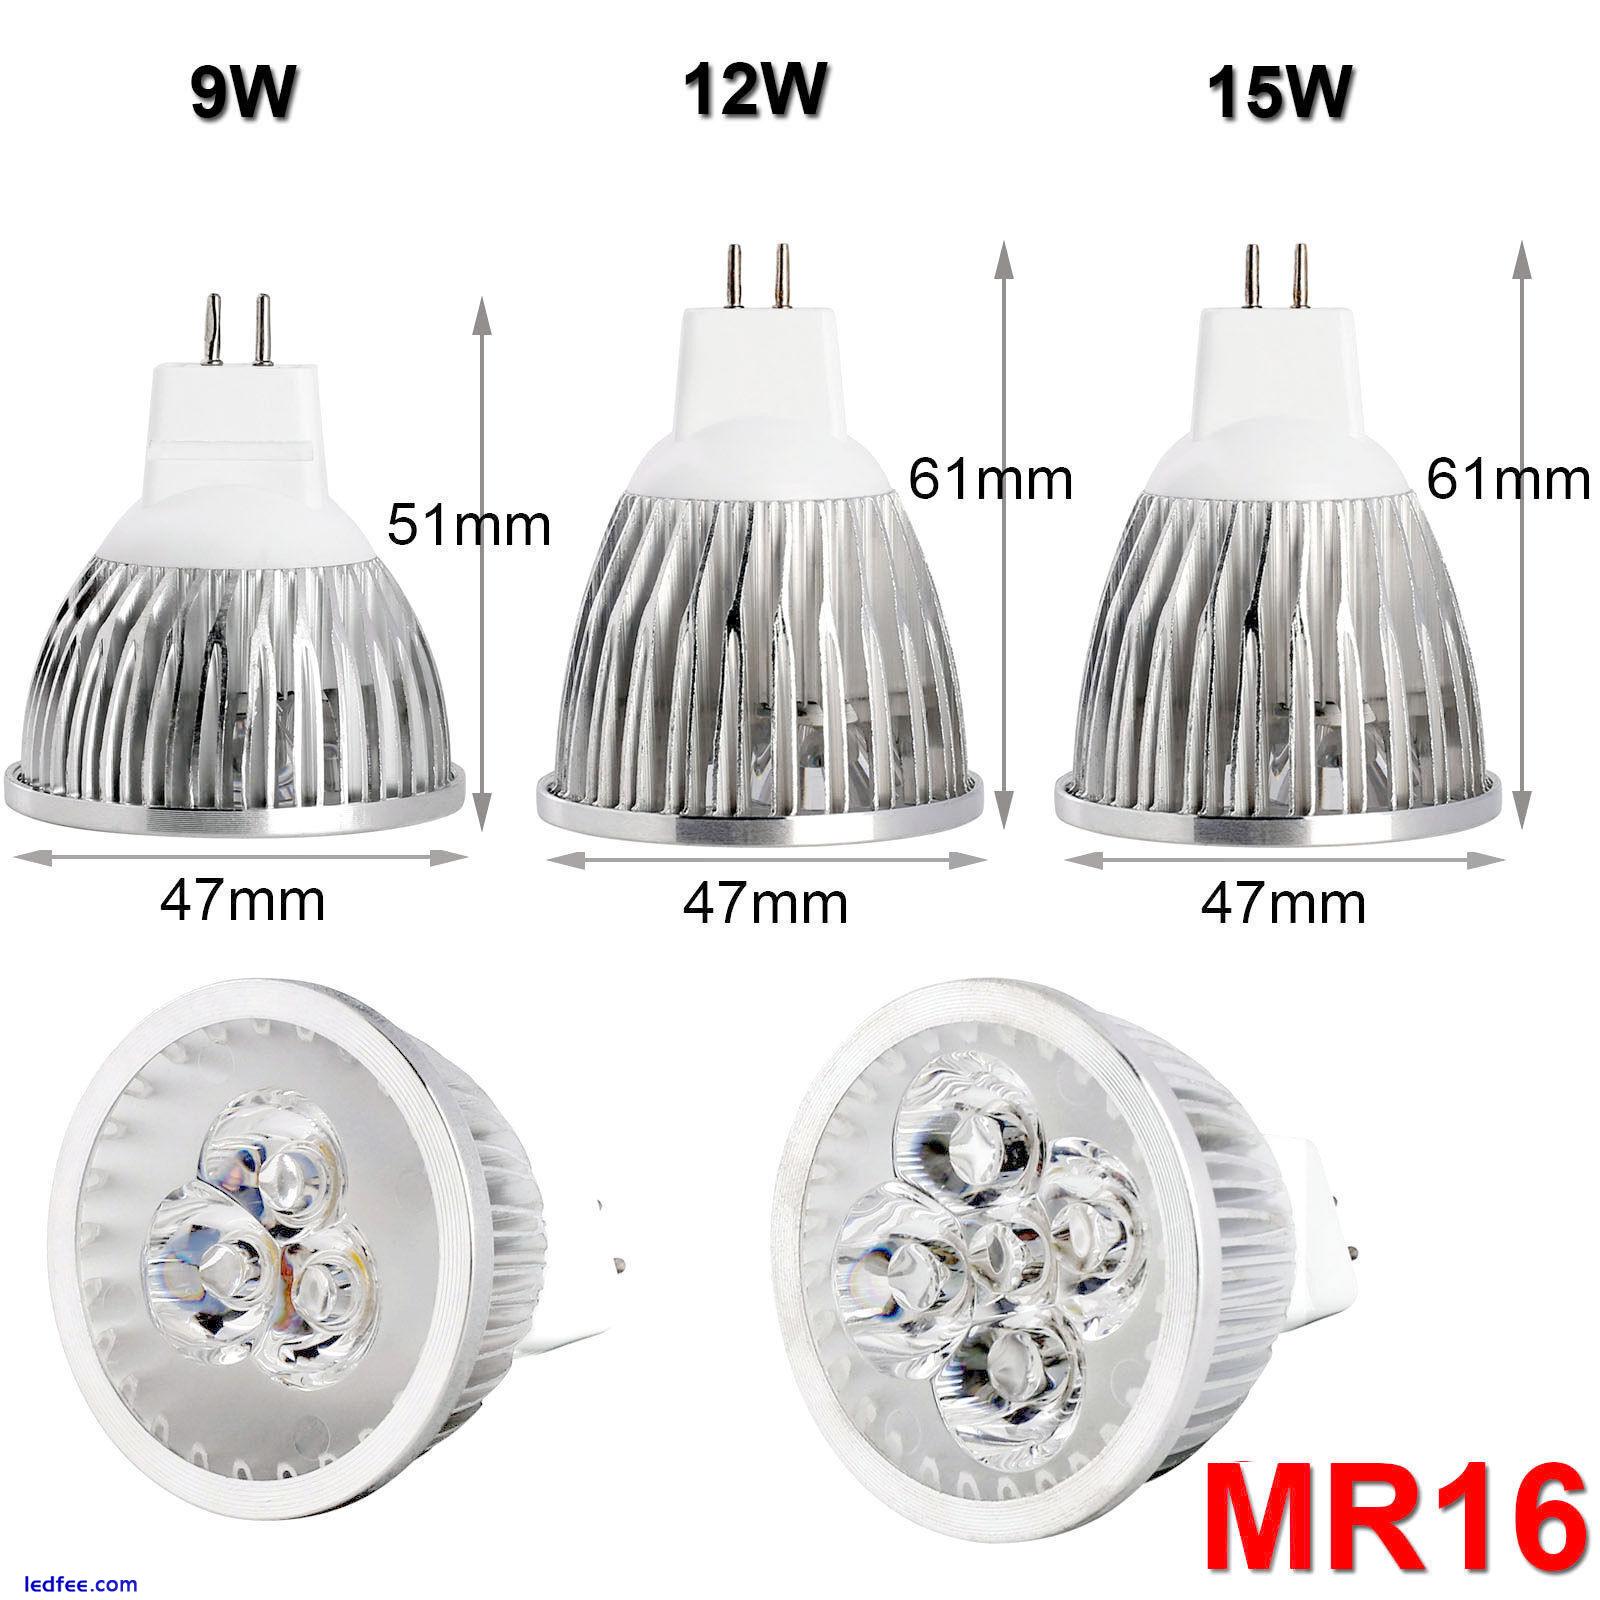 Muticolor GU10 MR16 Dimmable LED Spotlight Bulbs 9W 12W 15W 110V 220V 12V Lamps 4 